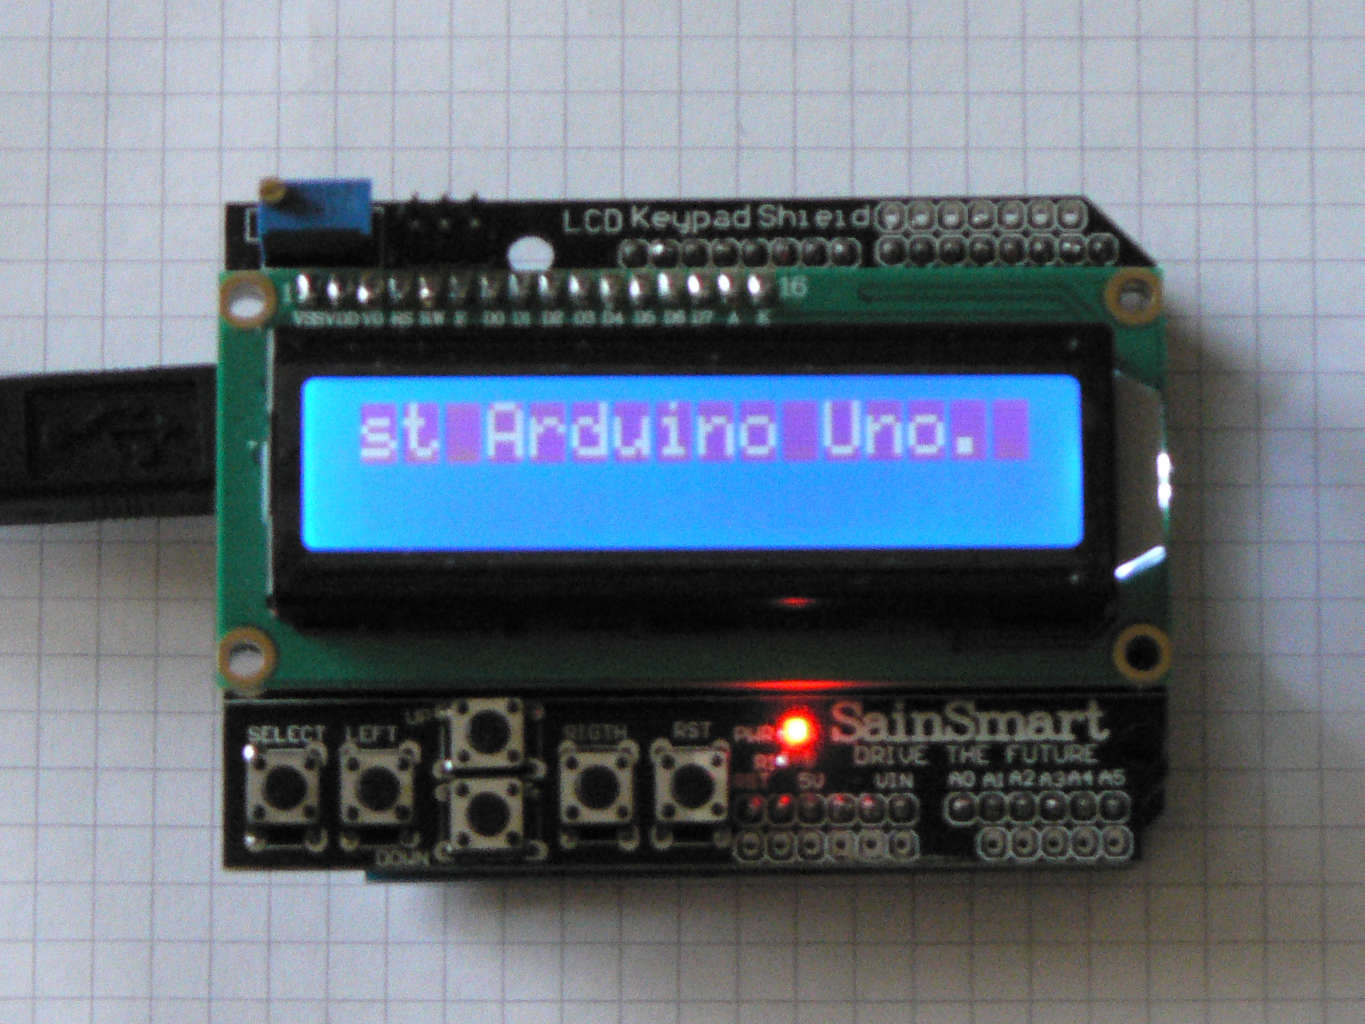 Arduino Uno mit SainSmart 1602 LCD Keypad Shield